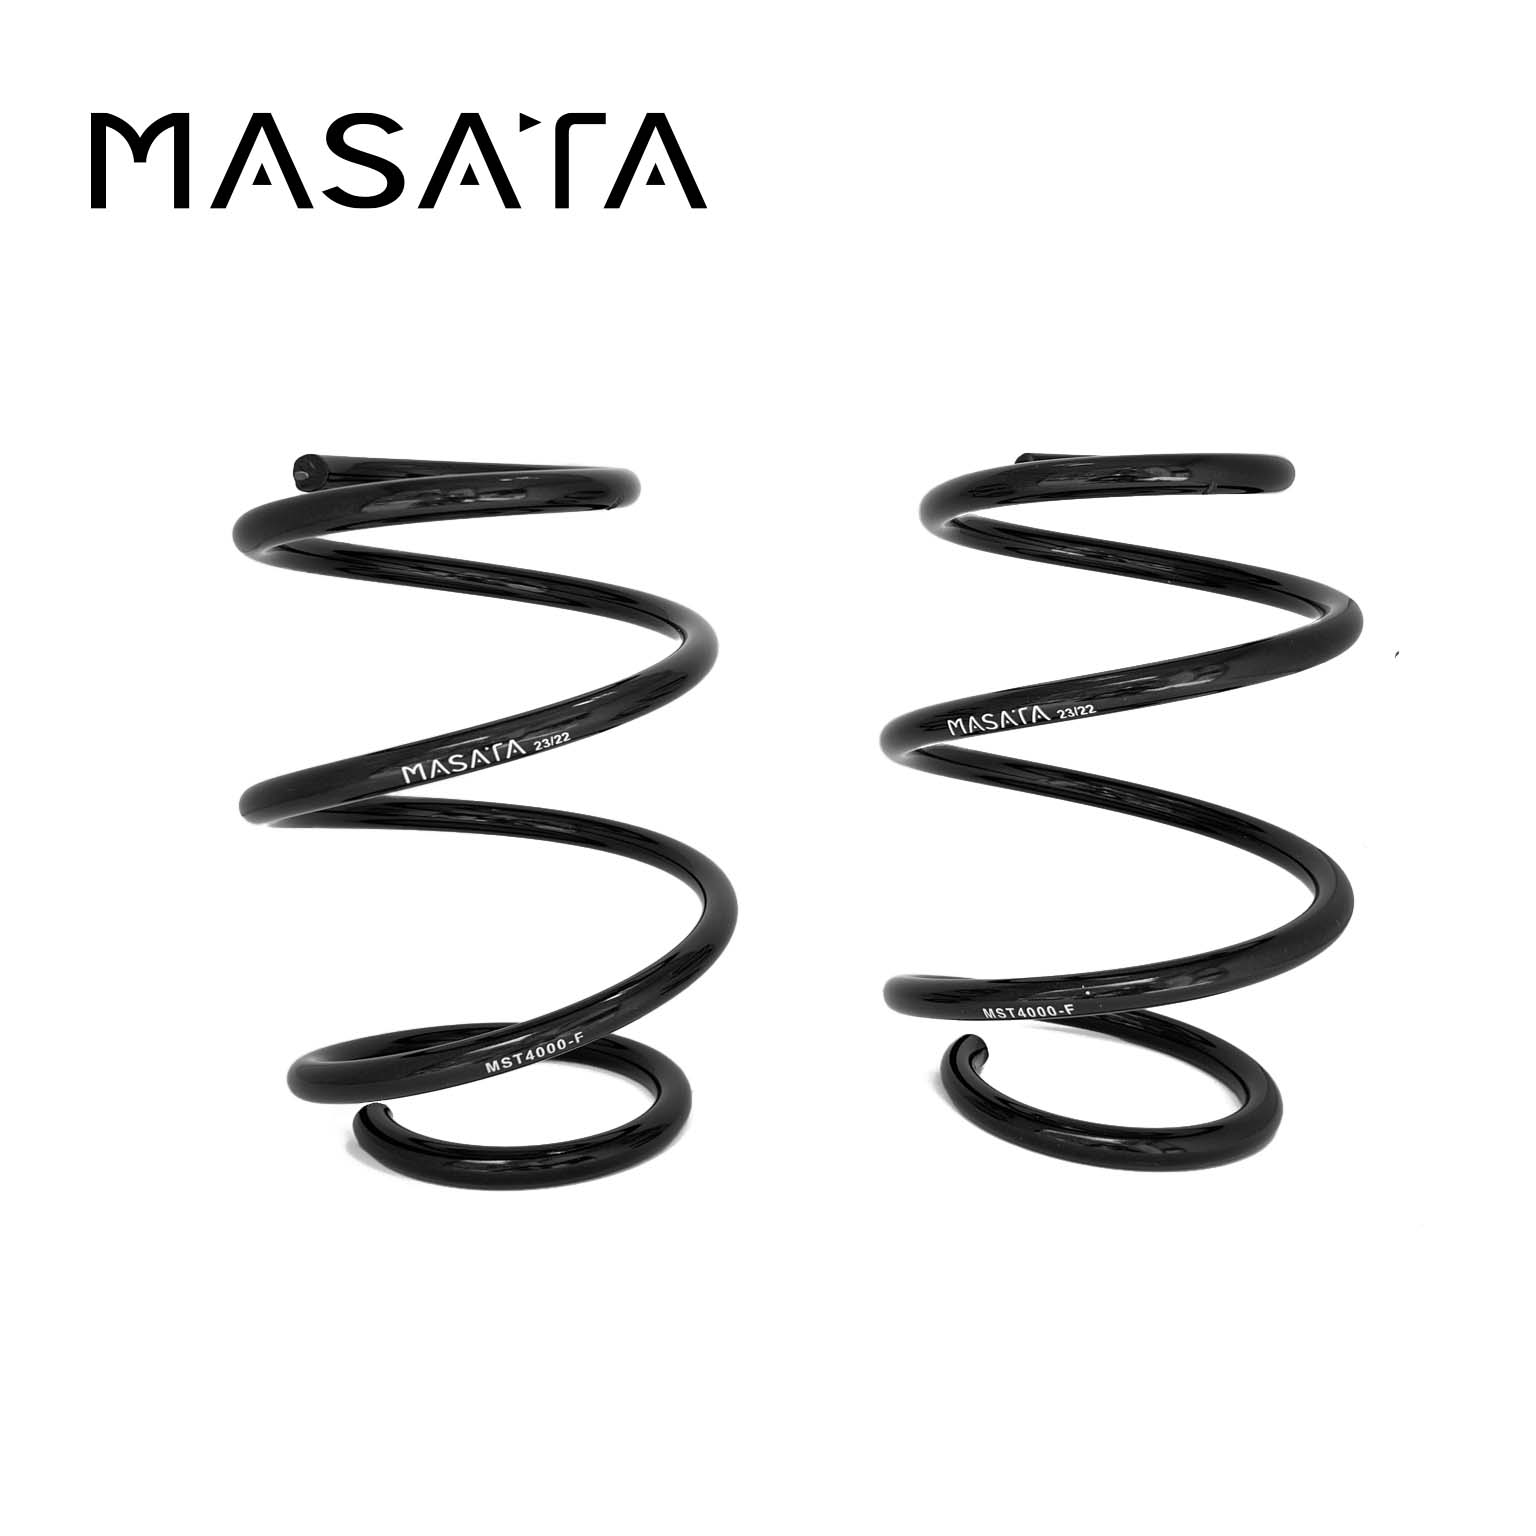 Masata BMW F80 F82 20mm/10mm Lowering Springs (Inc. M3, M4, M4 CS & M4 Competition) - MASATA UK